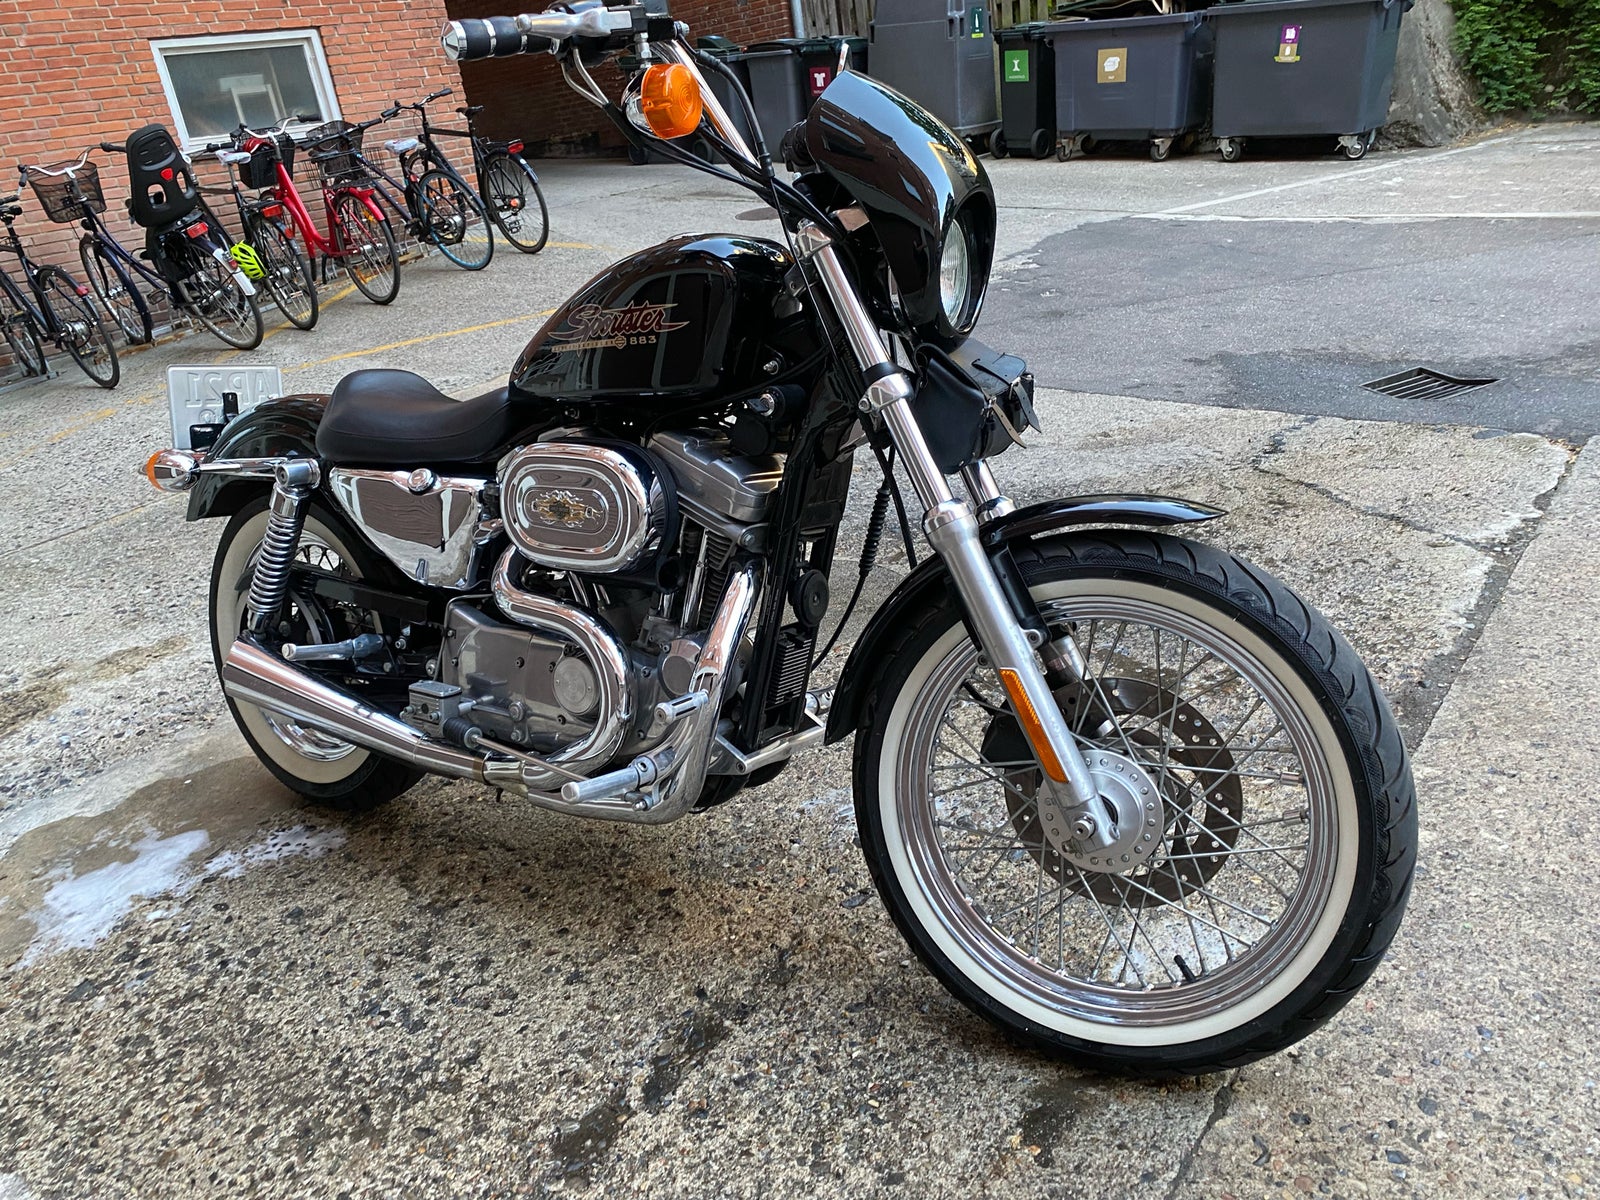 Harley-Davidson, Harley Davidson Sportster XL883C, 883